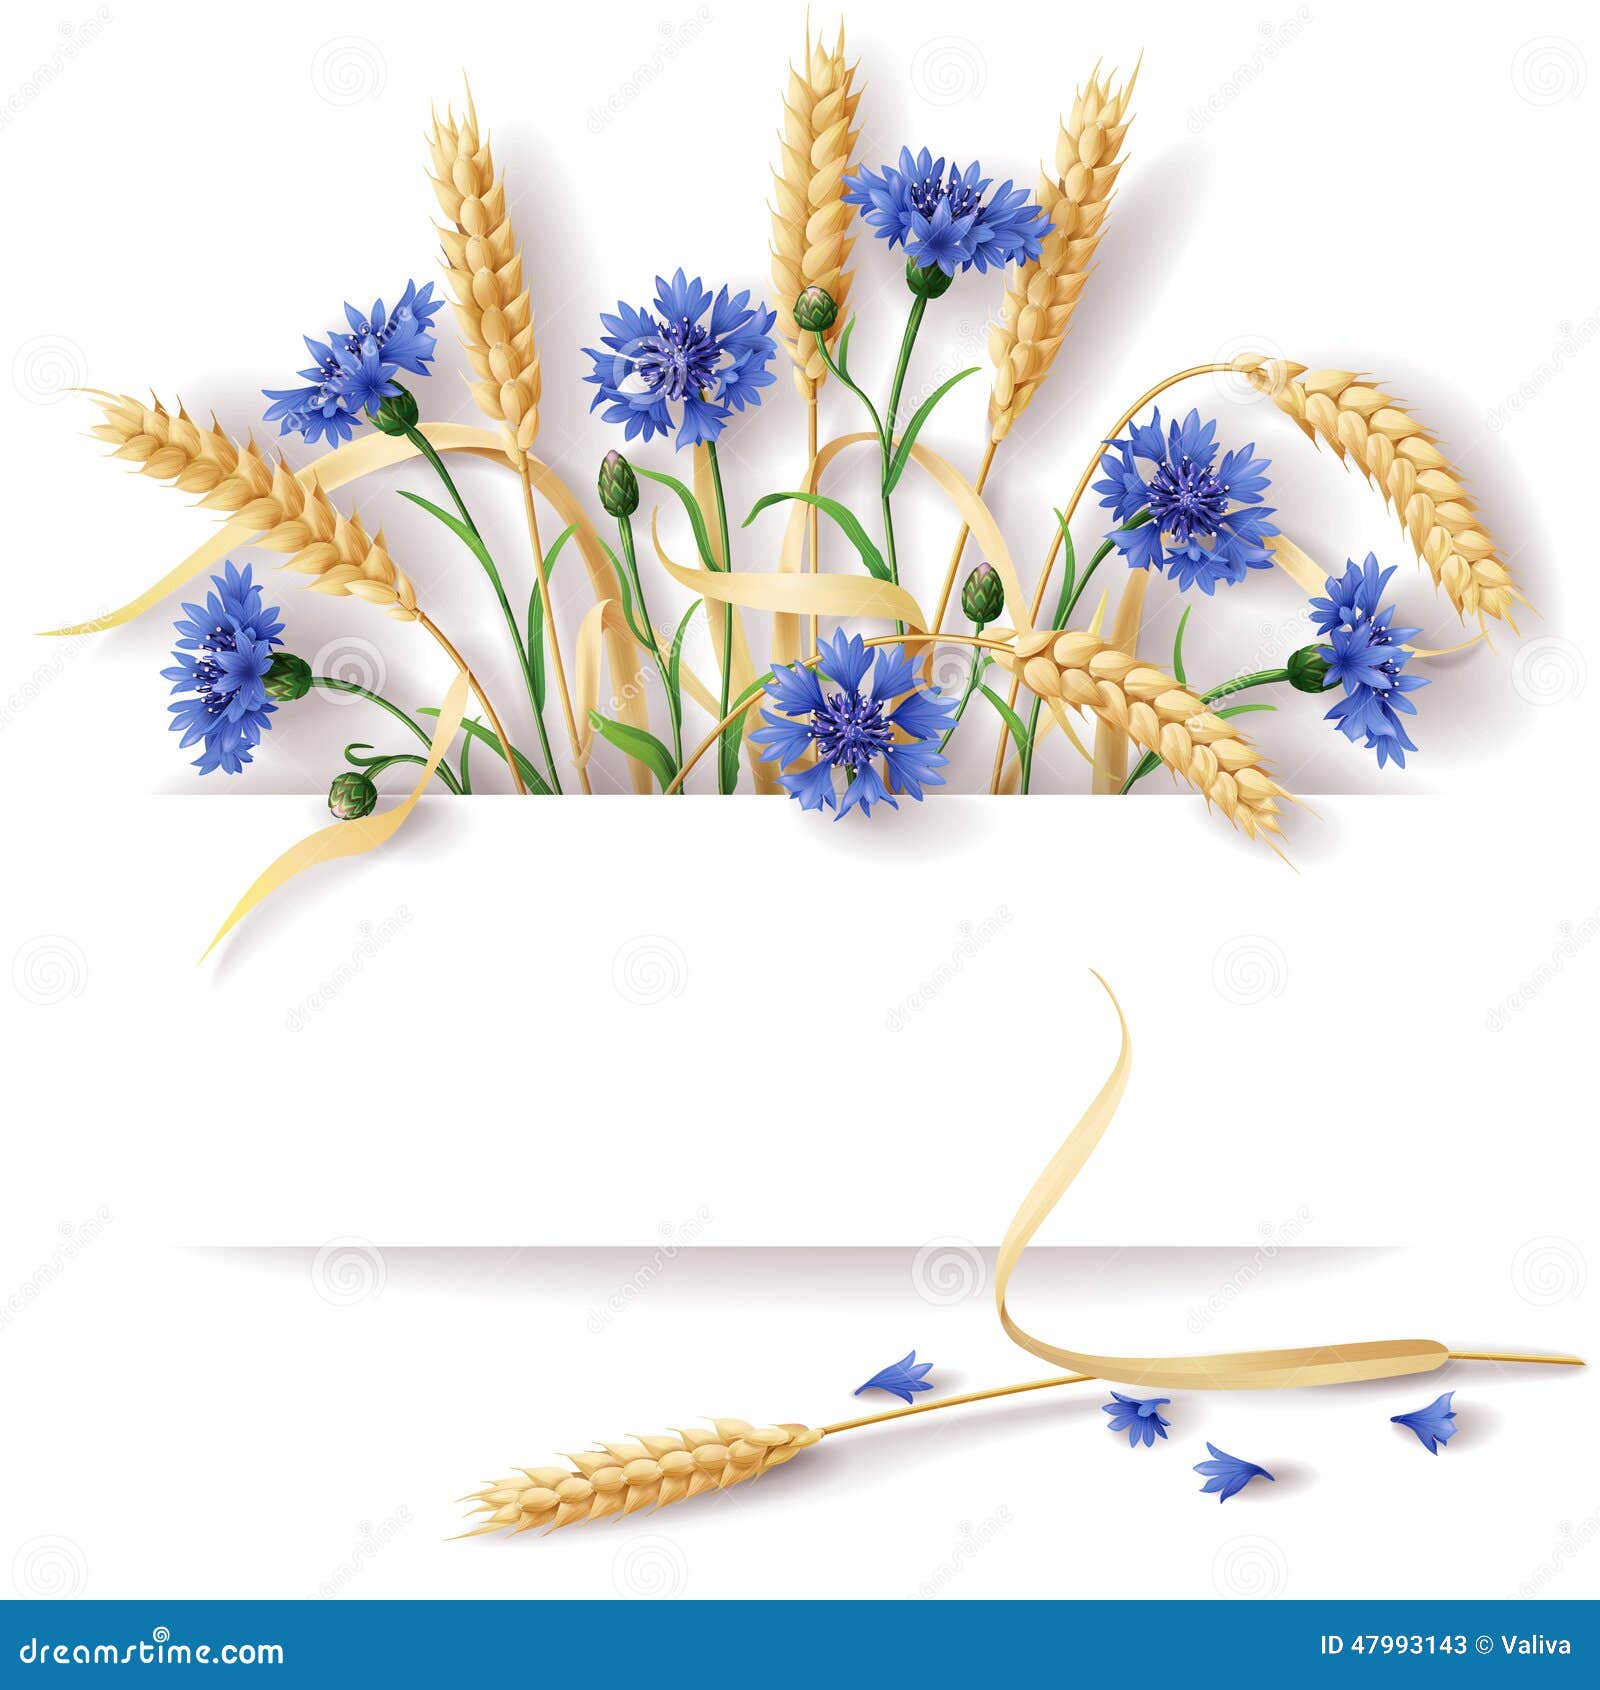 wheat ears and cornflowers